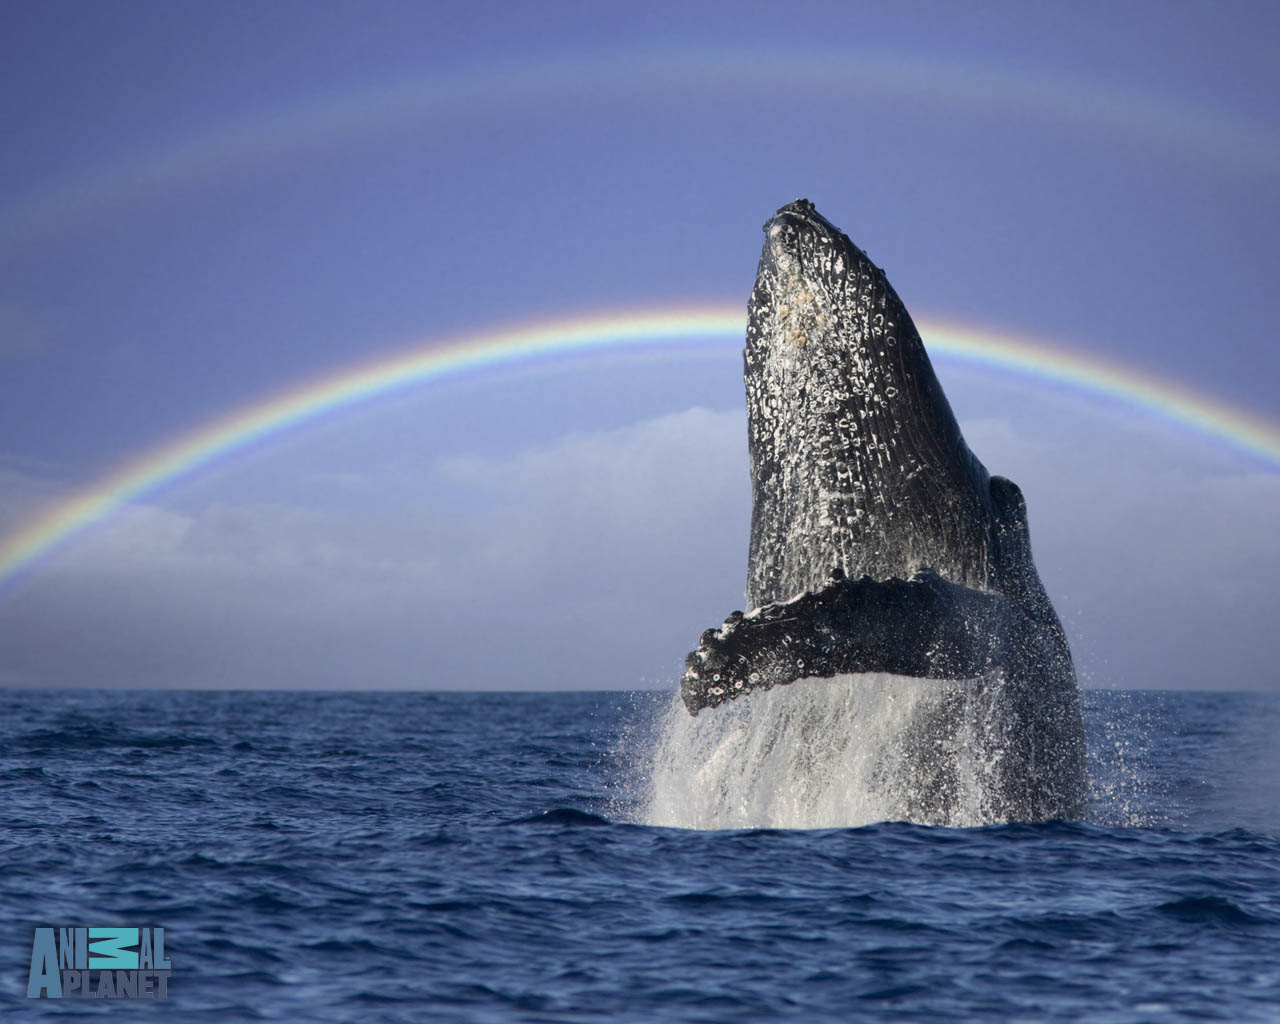 fond d'écran baleine bleue hd,mammifère marin,l'eau,océan,ciel,baleine